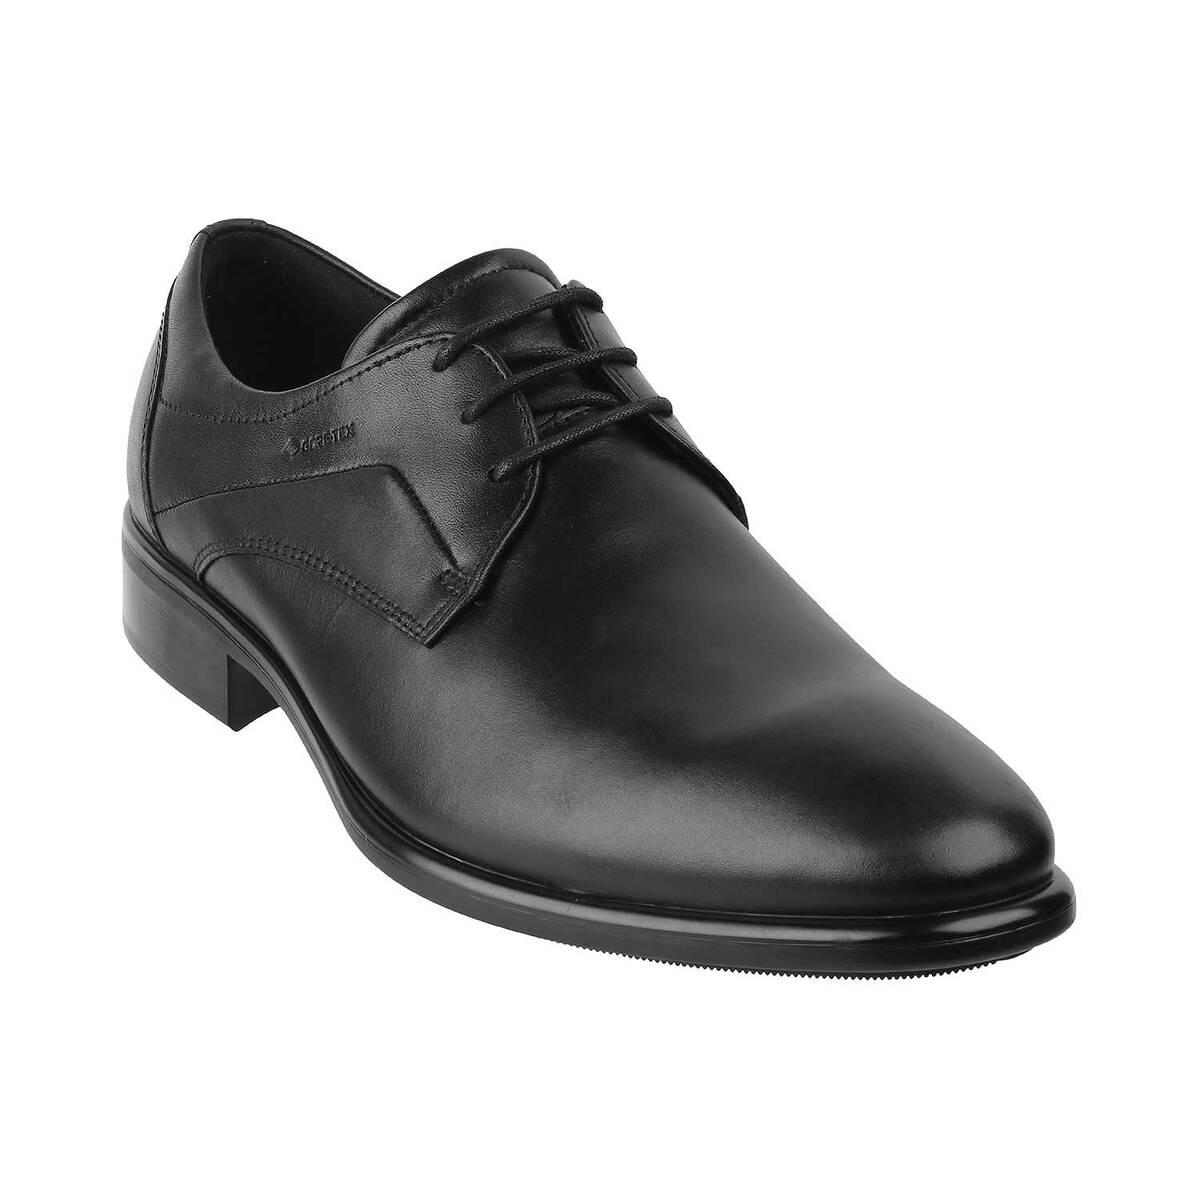 HM Men formal shoes, Size: Uk9 at Rs 799/pair in Bokaro Steel City